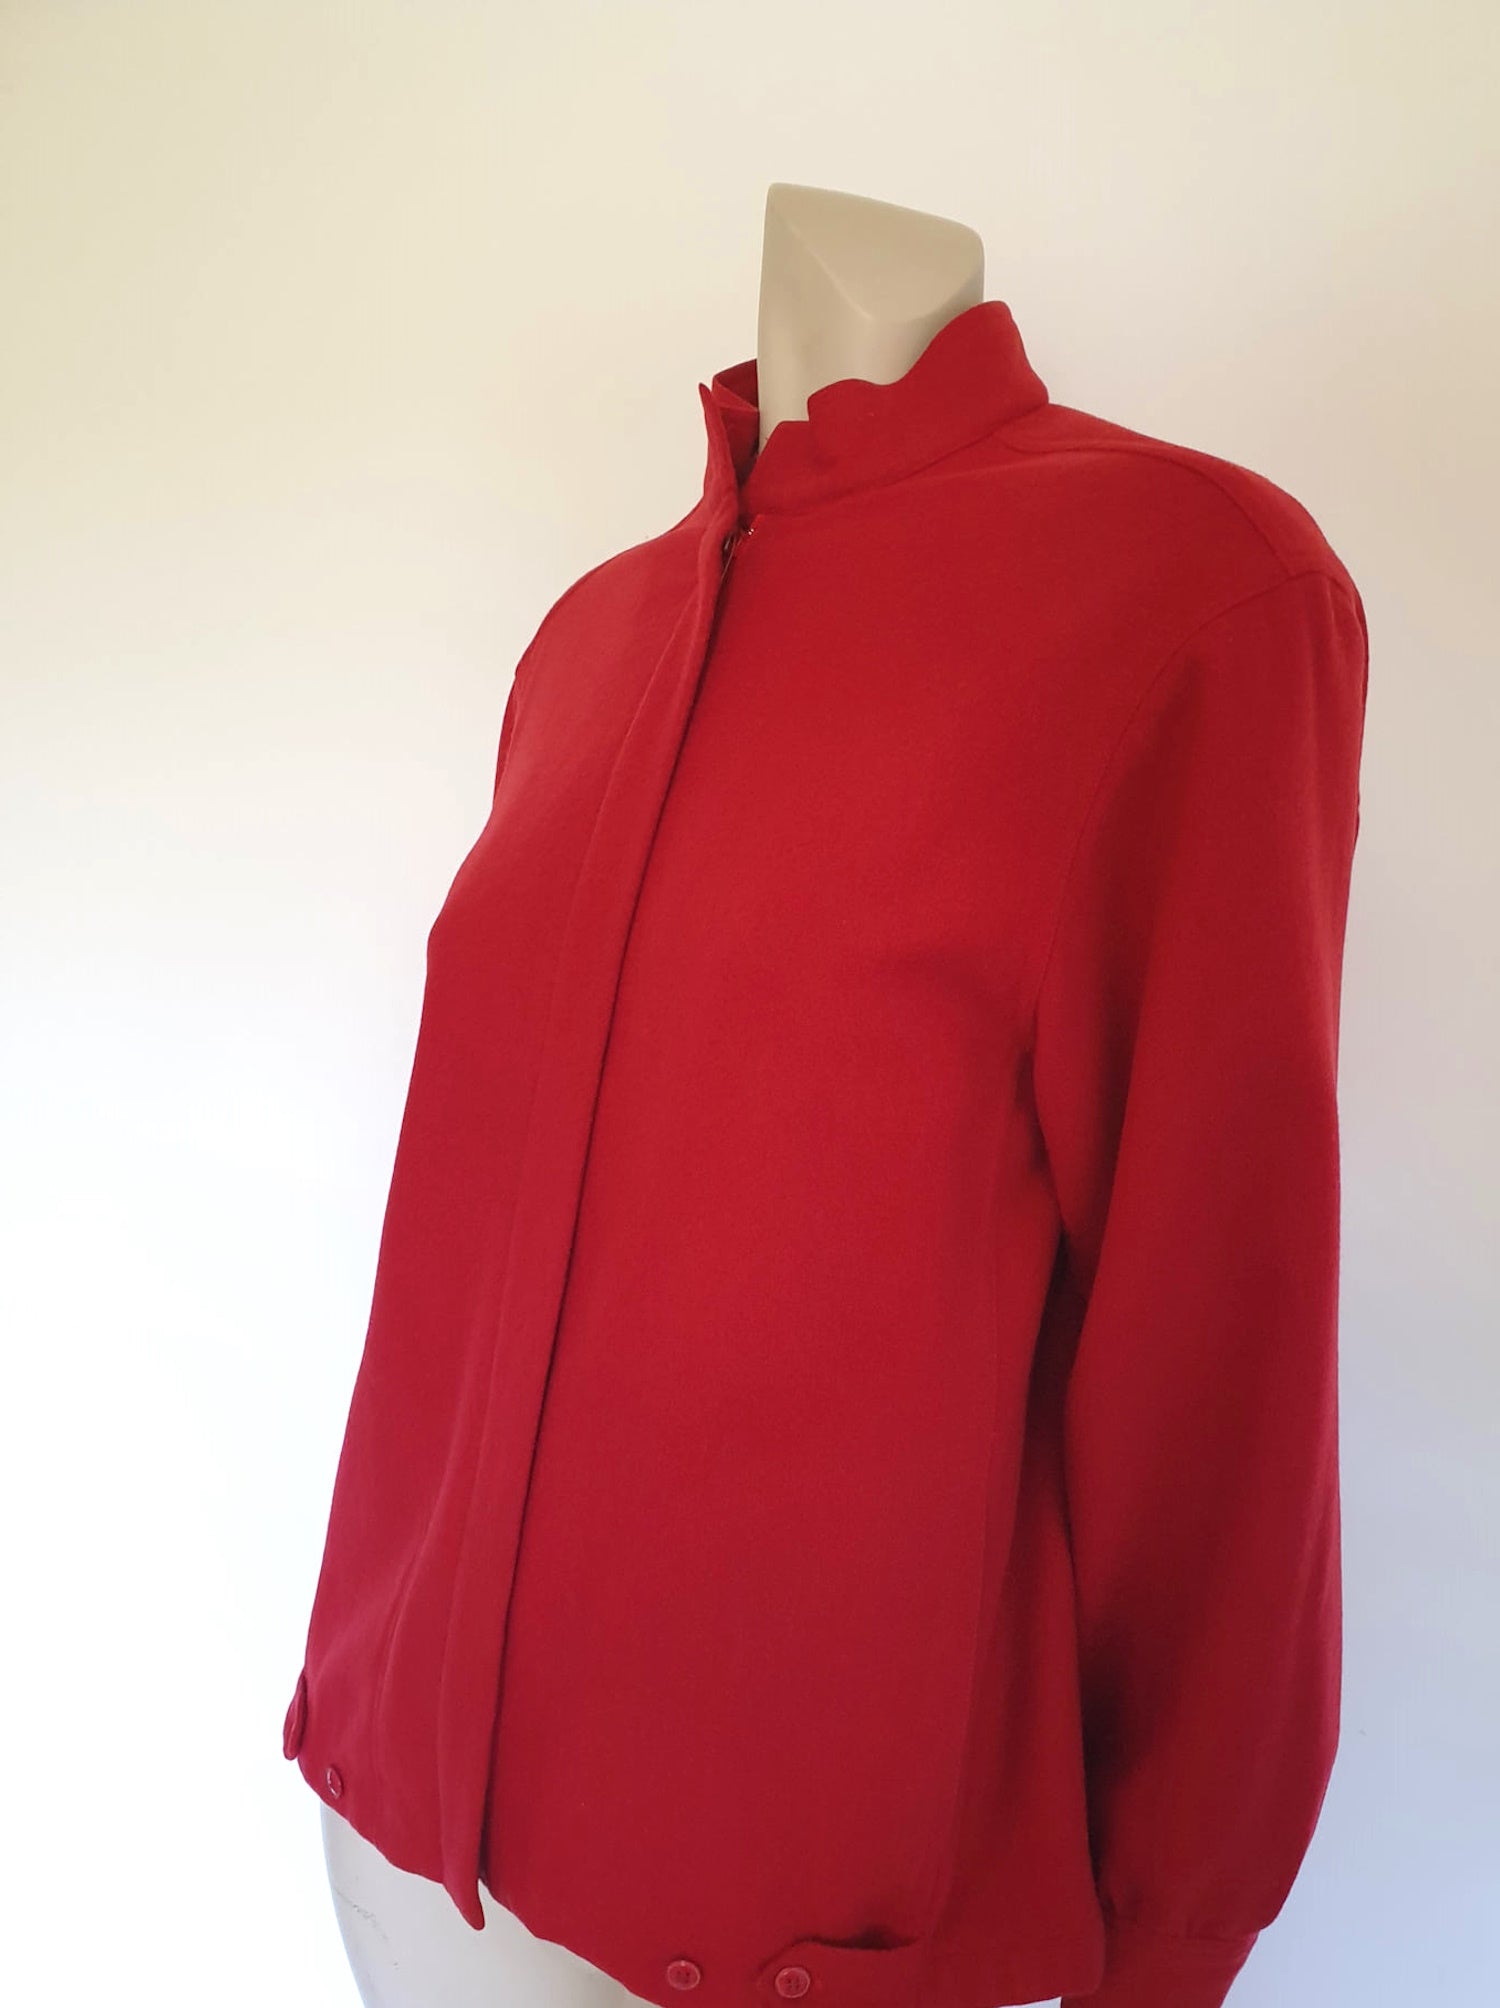 1970s vintage red wool jacket zip front medium